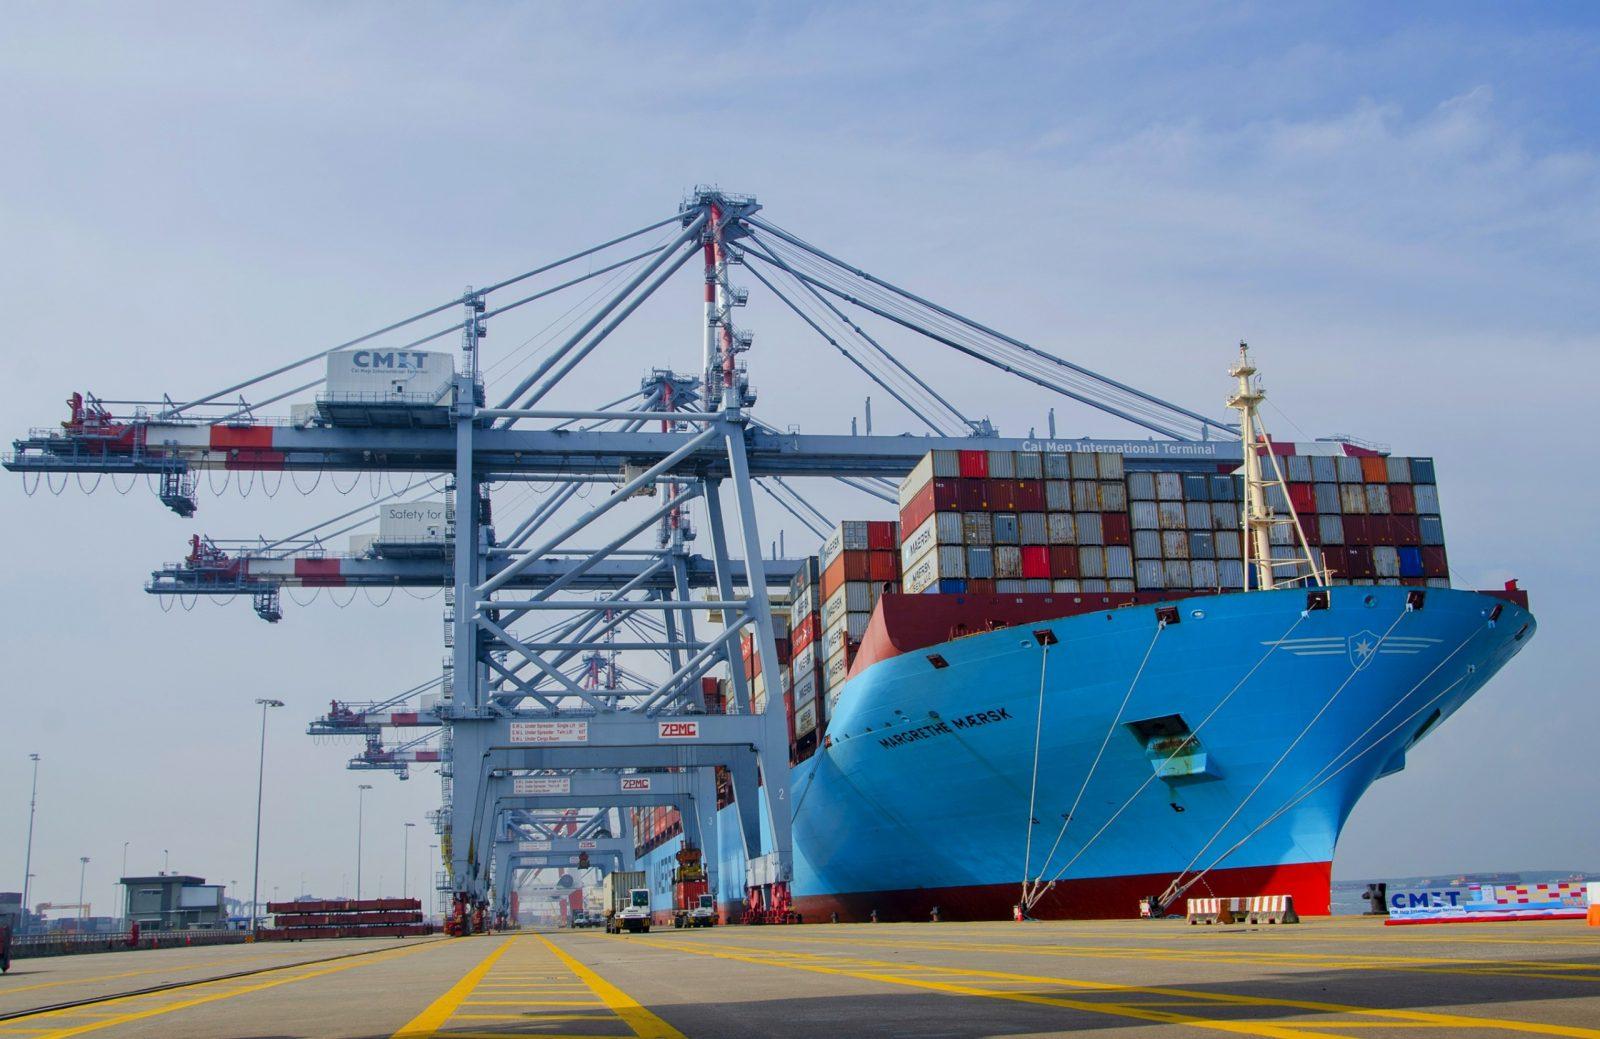 Siêu tàu container Margrethe Maersk cập cảng Việt Nam